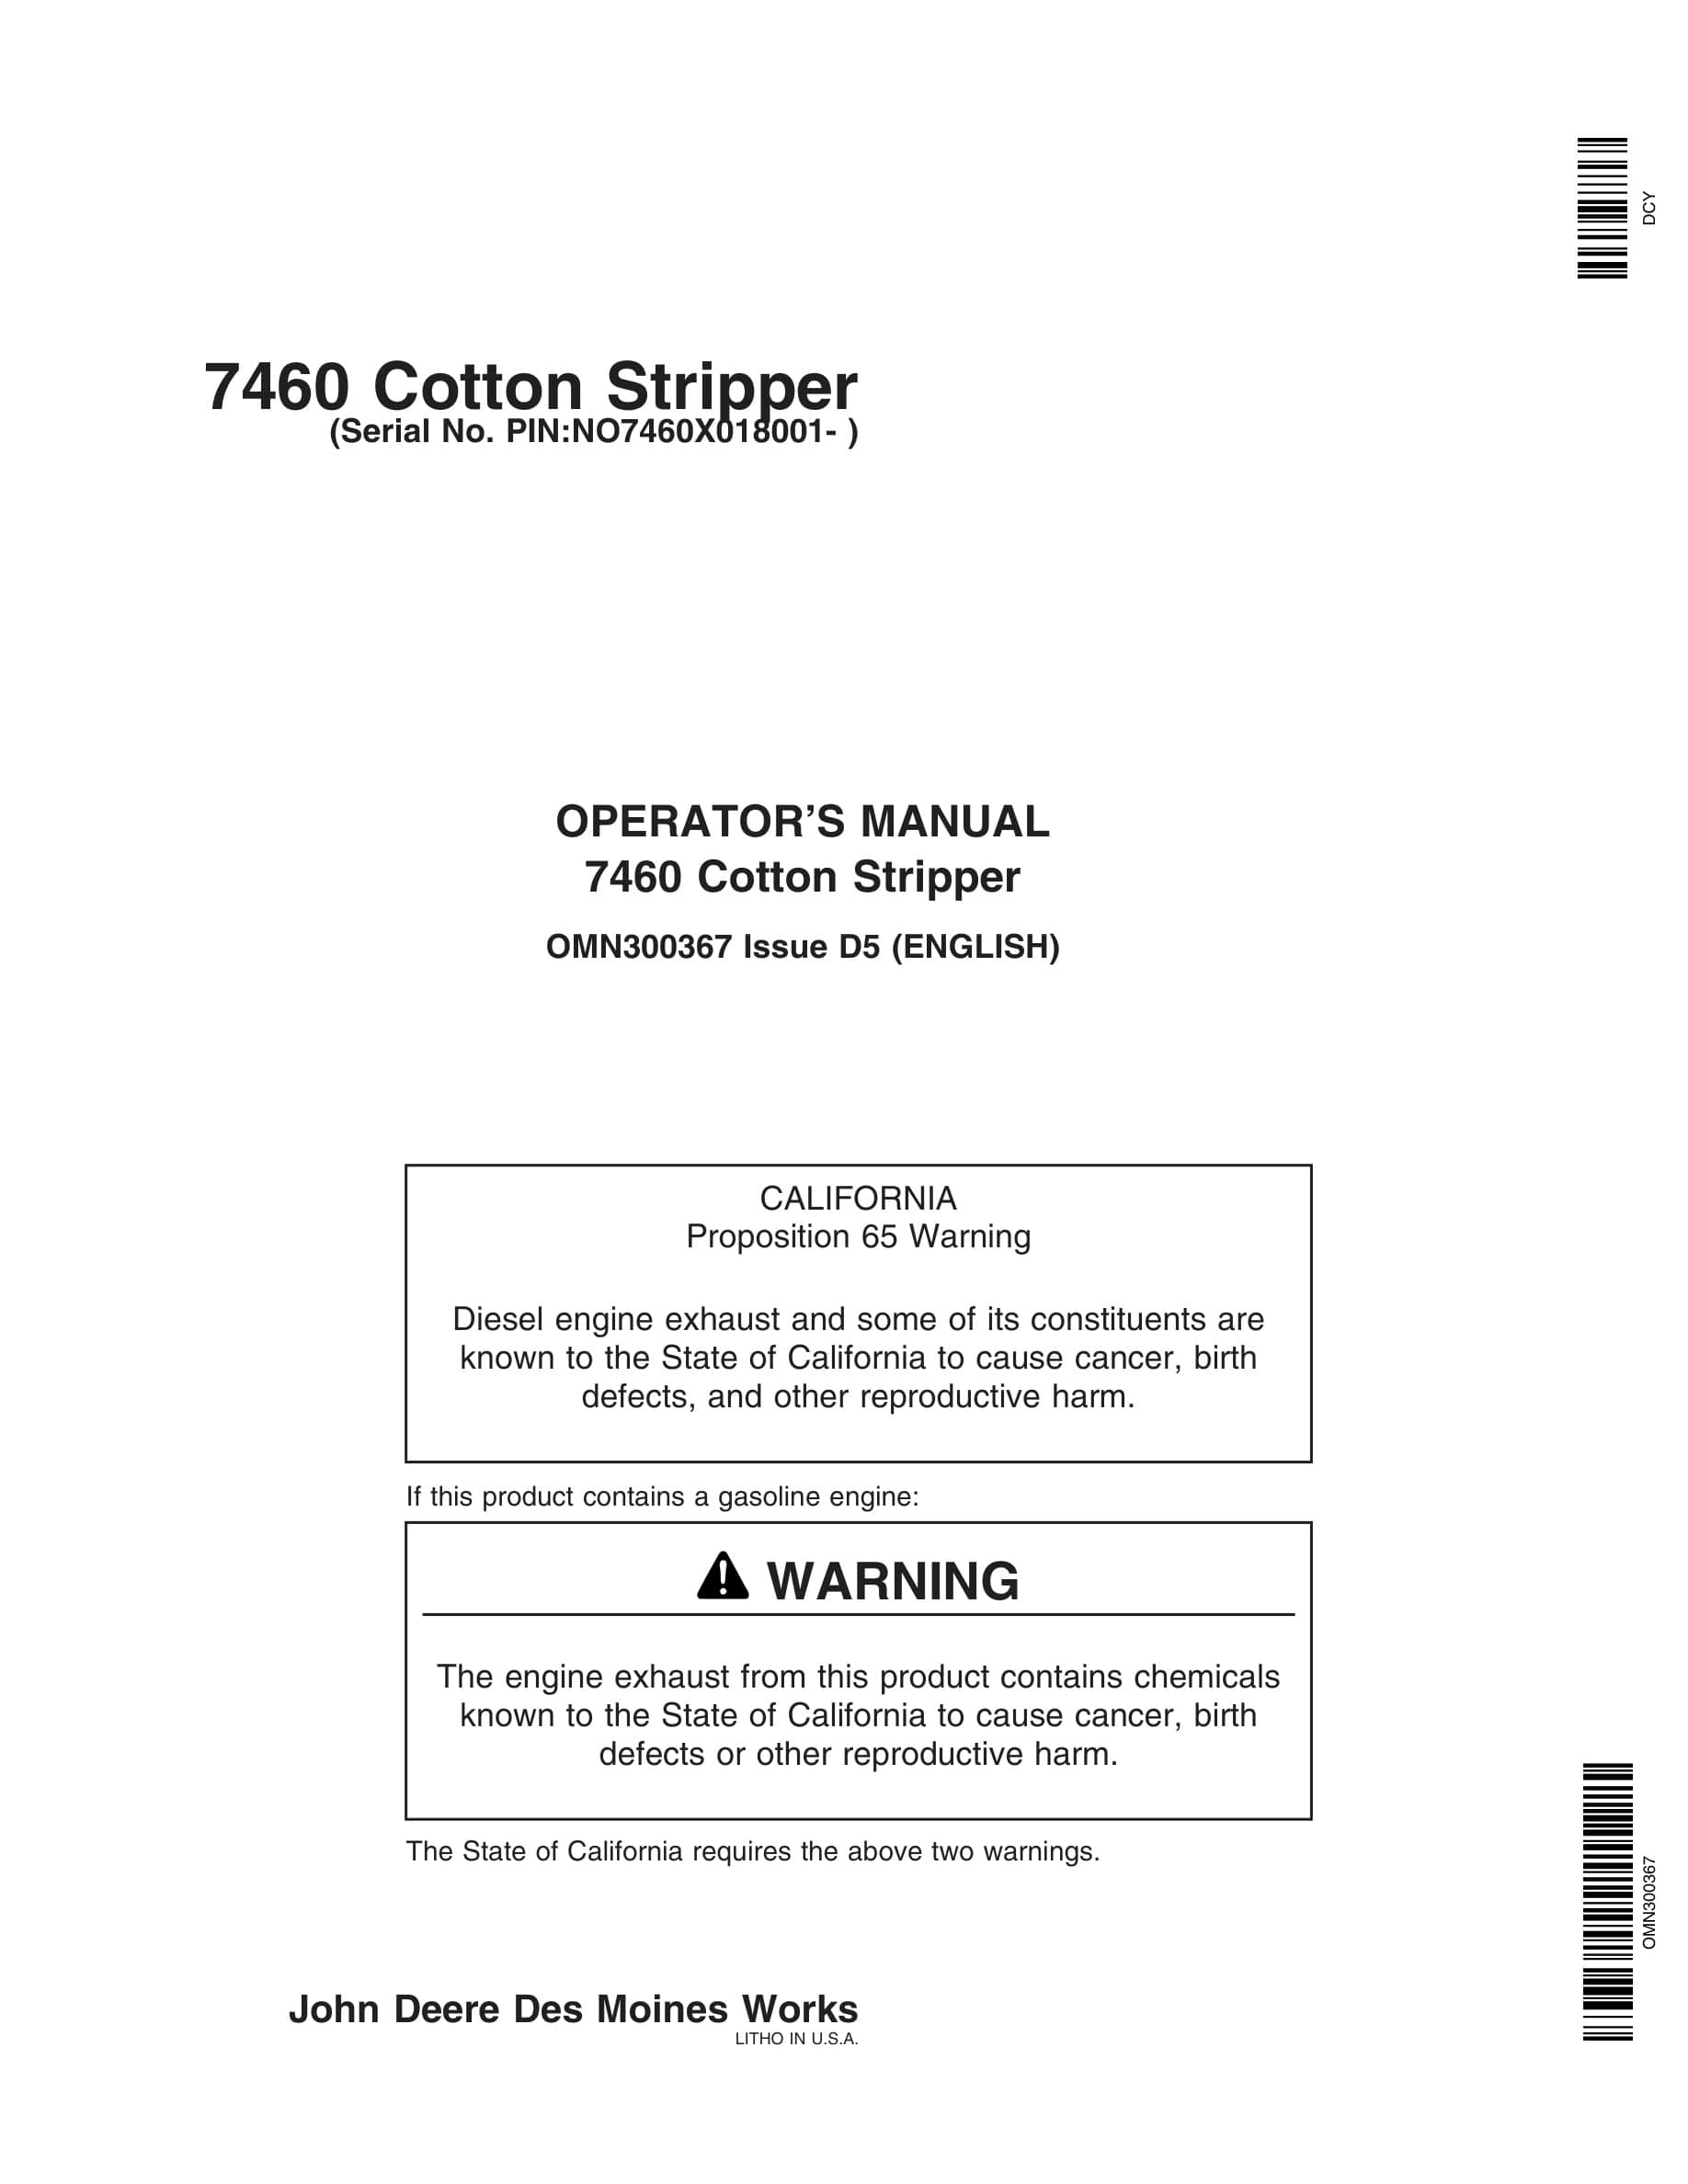 John Deere 7460 Cotton Stripper Operator Manual OMN300367-1